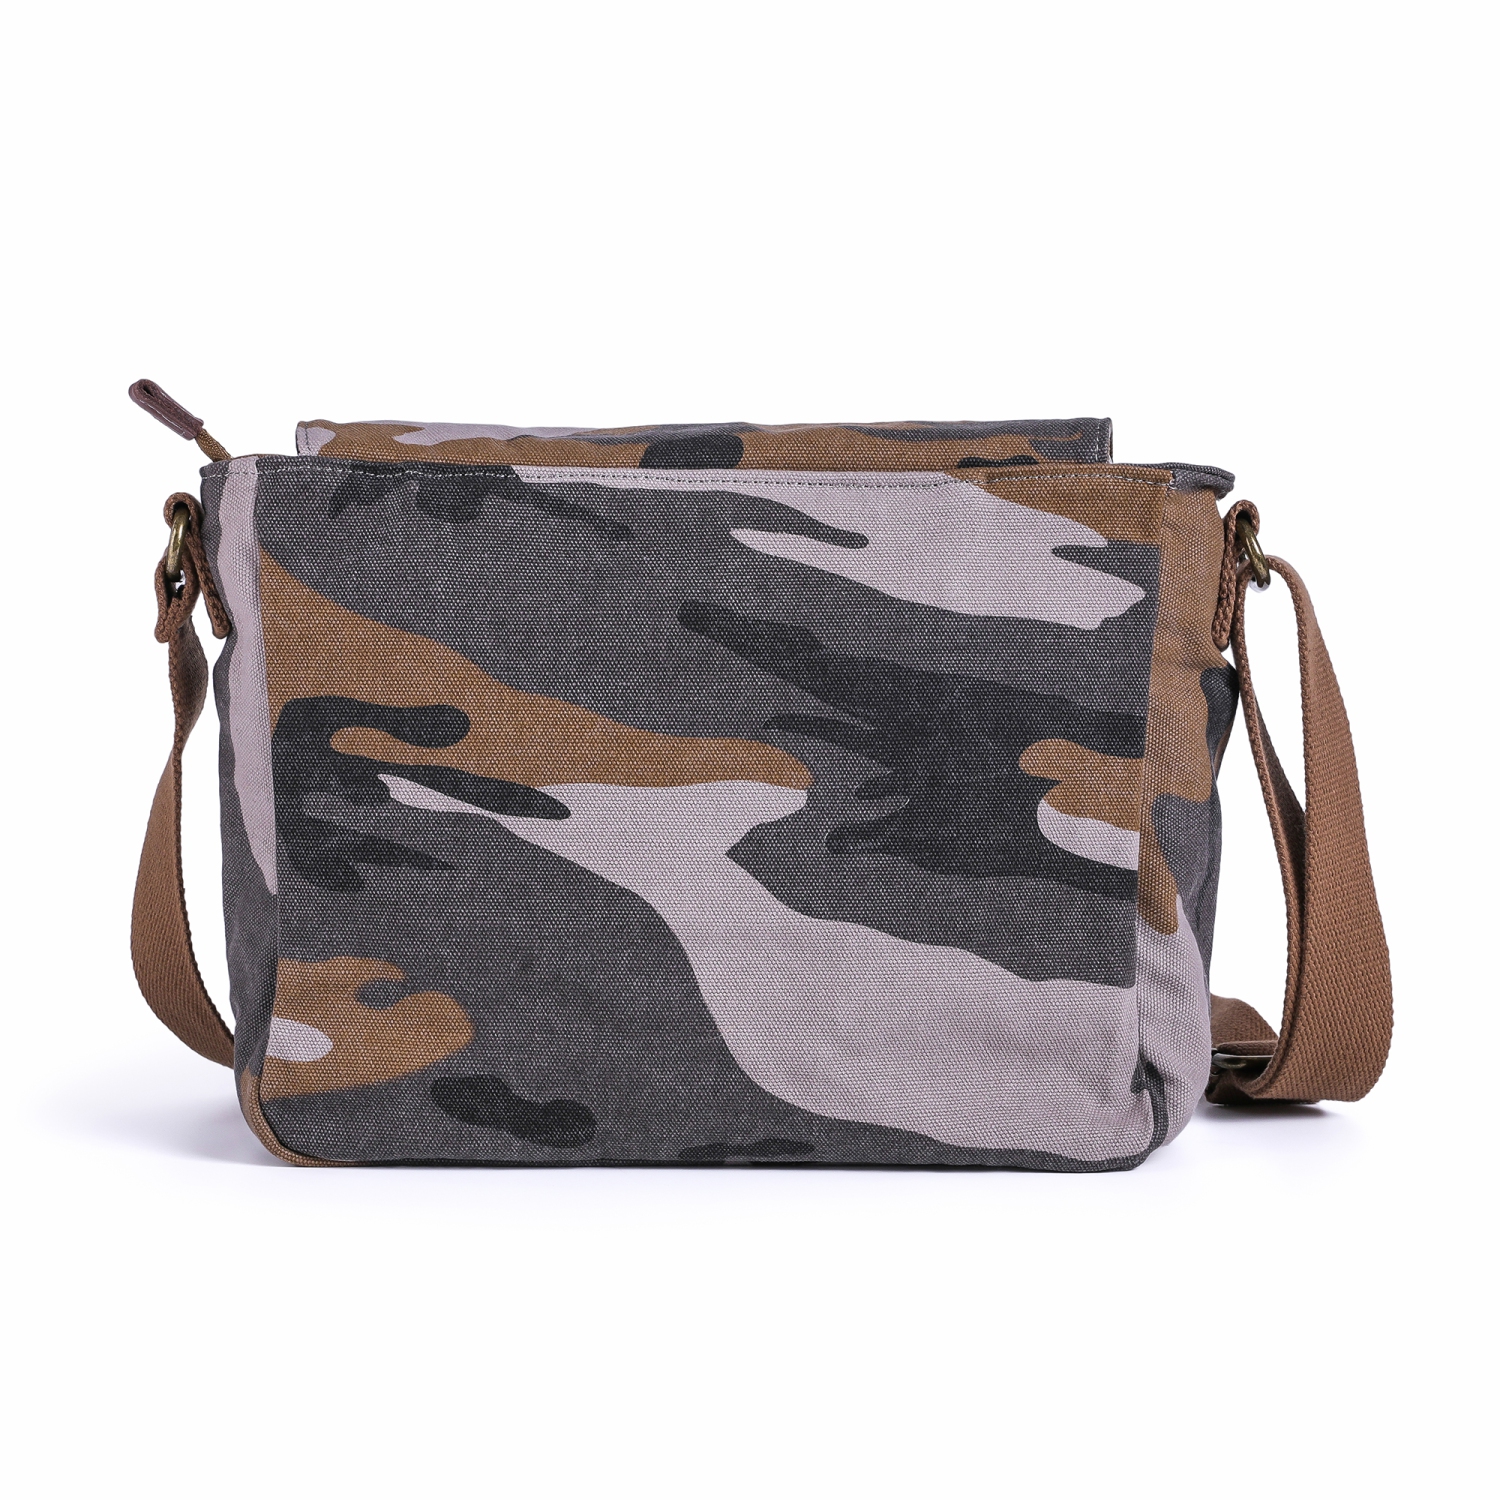 Gootium Canvas Messenger Bag - Vintage Crossbody Shoulder Bag Military  Satchel